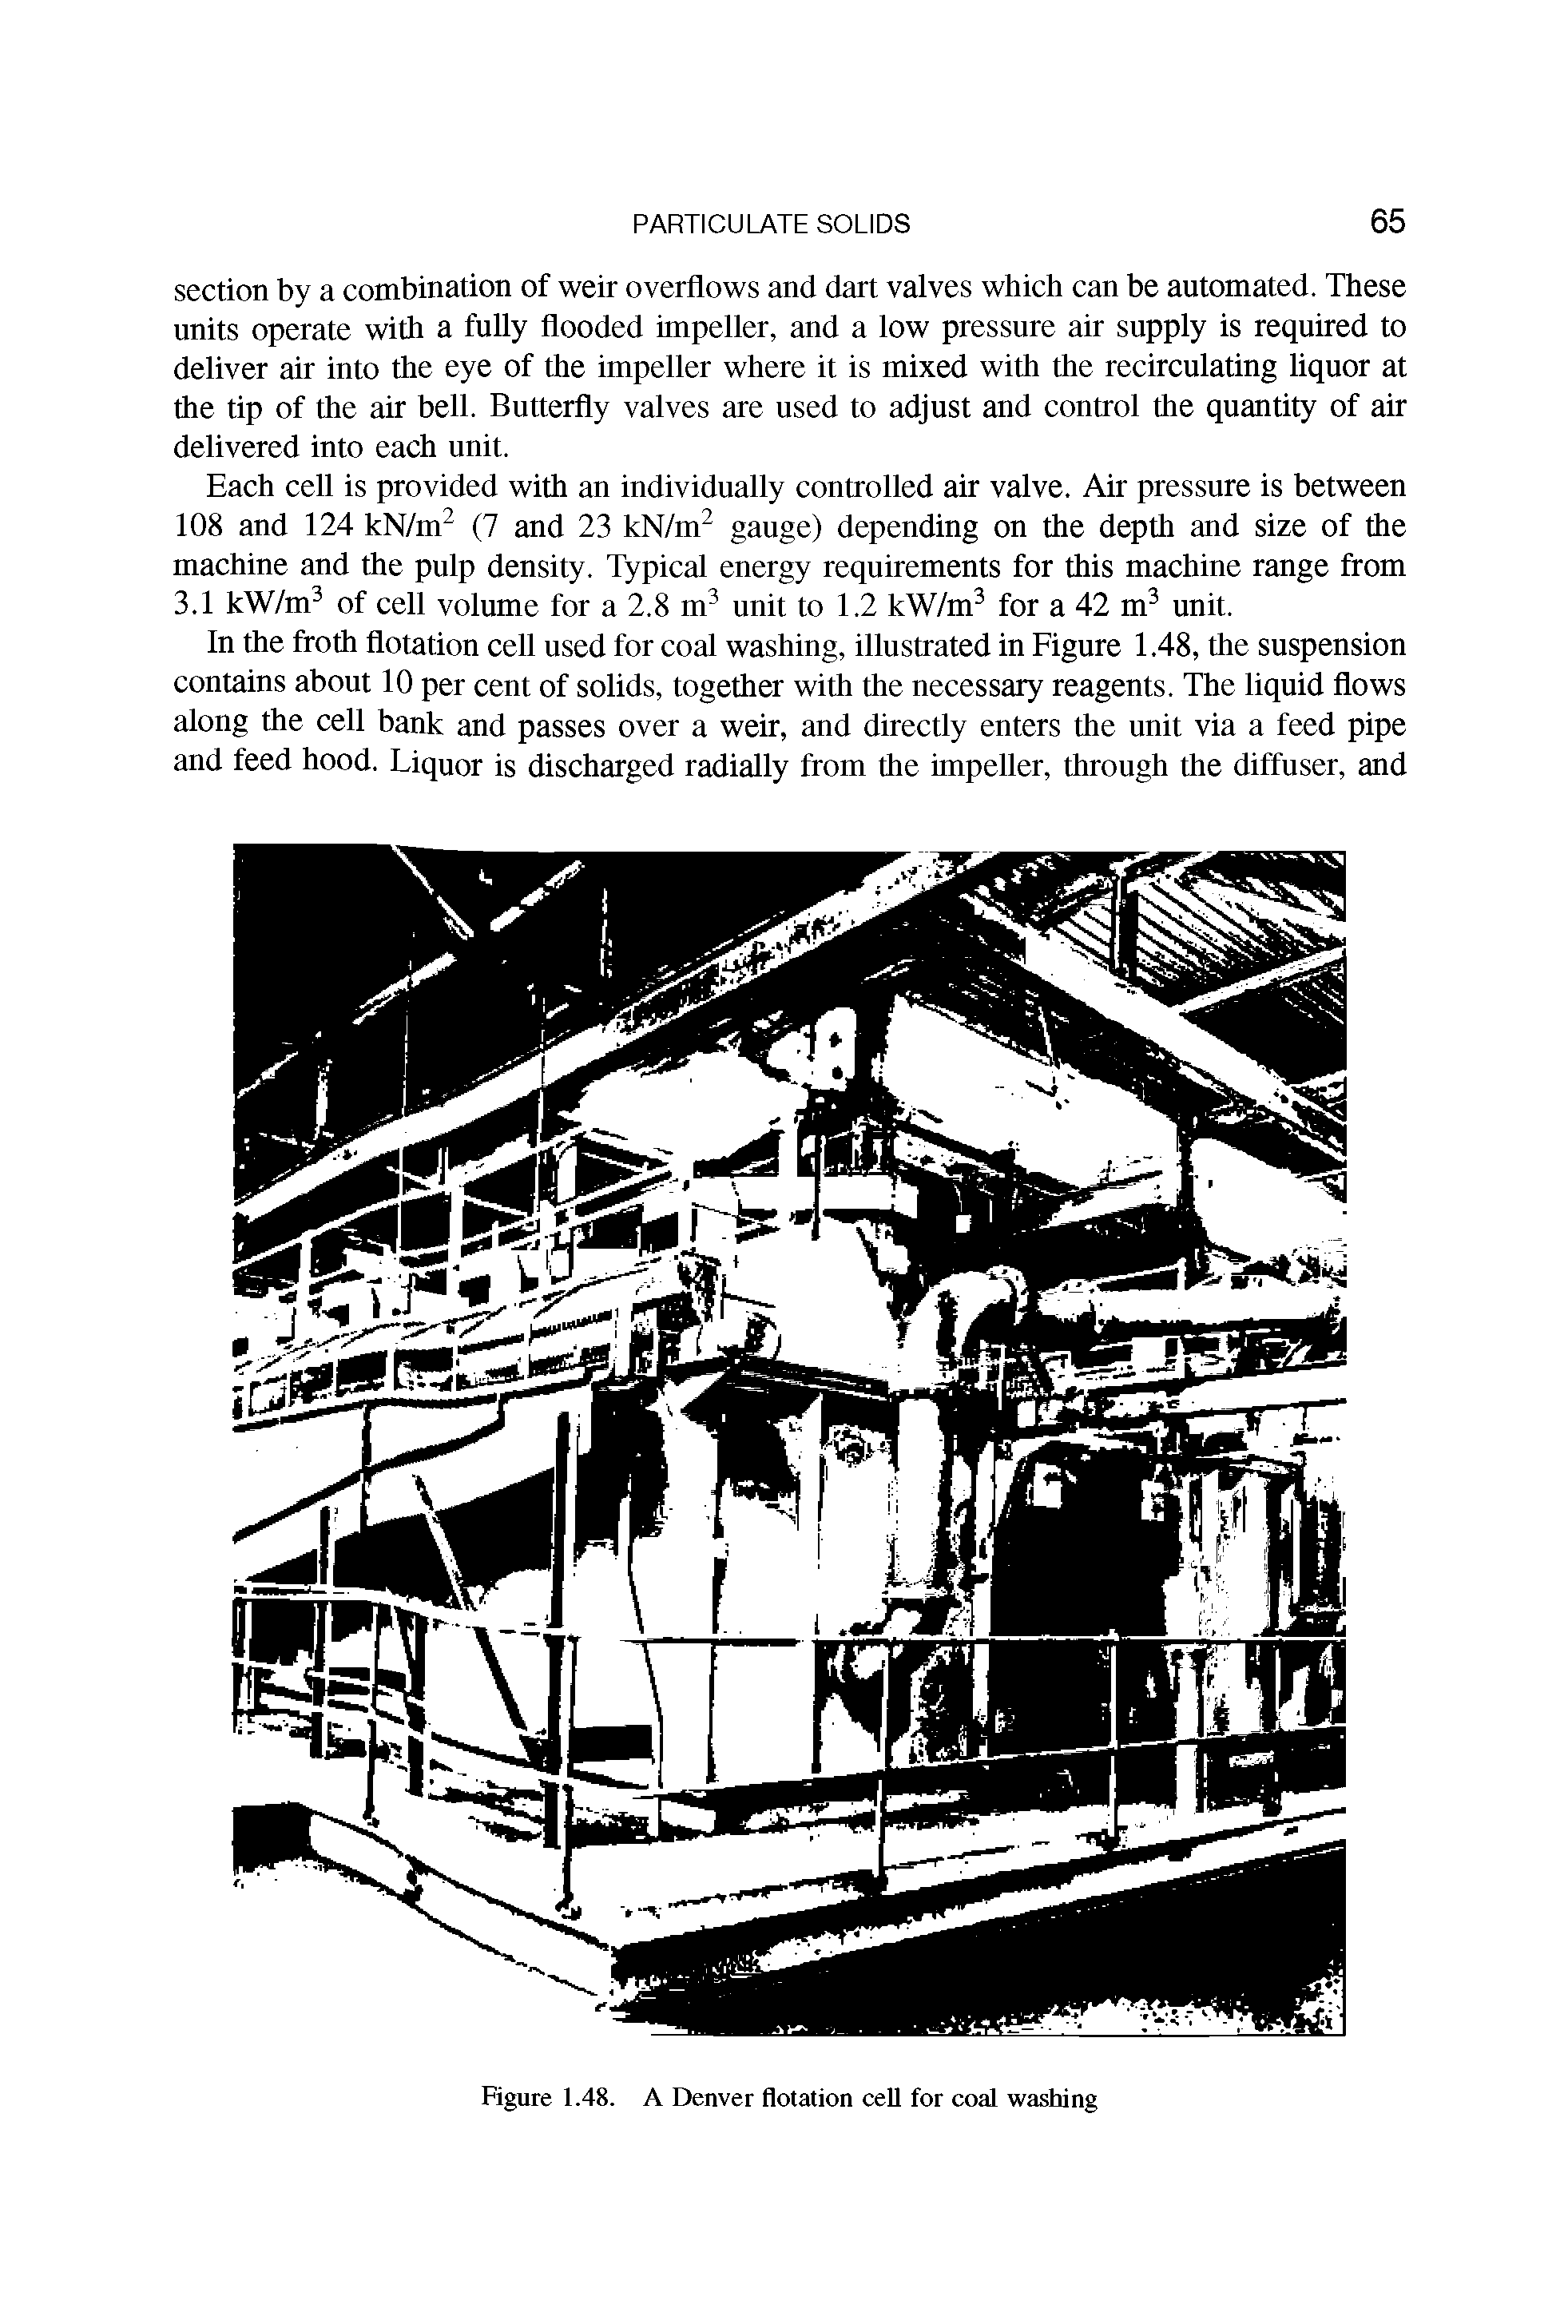 Figure 1.48. A Denver flotation cell for coal washing...